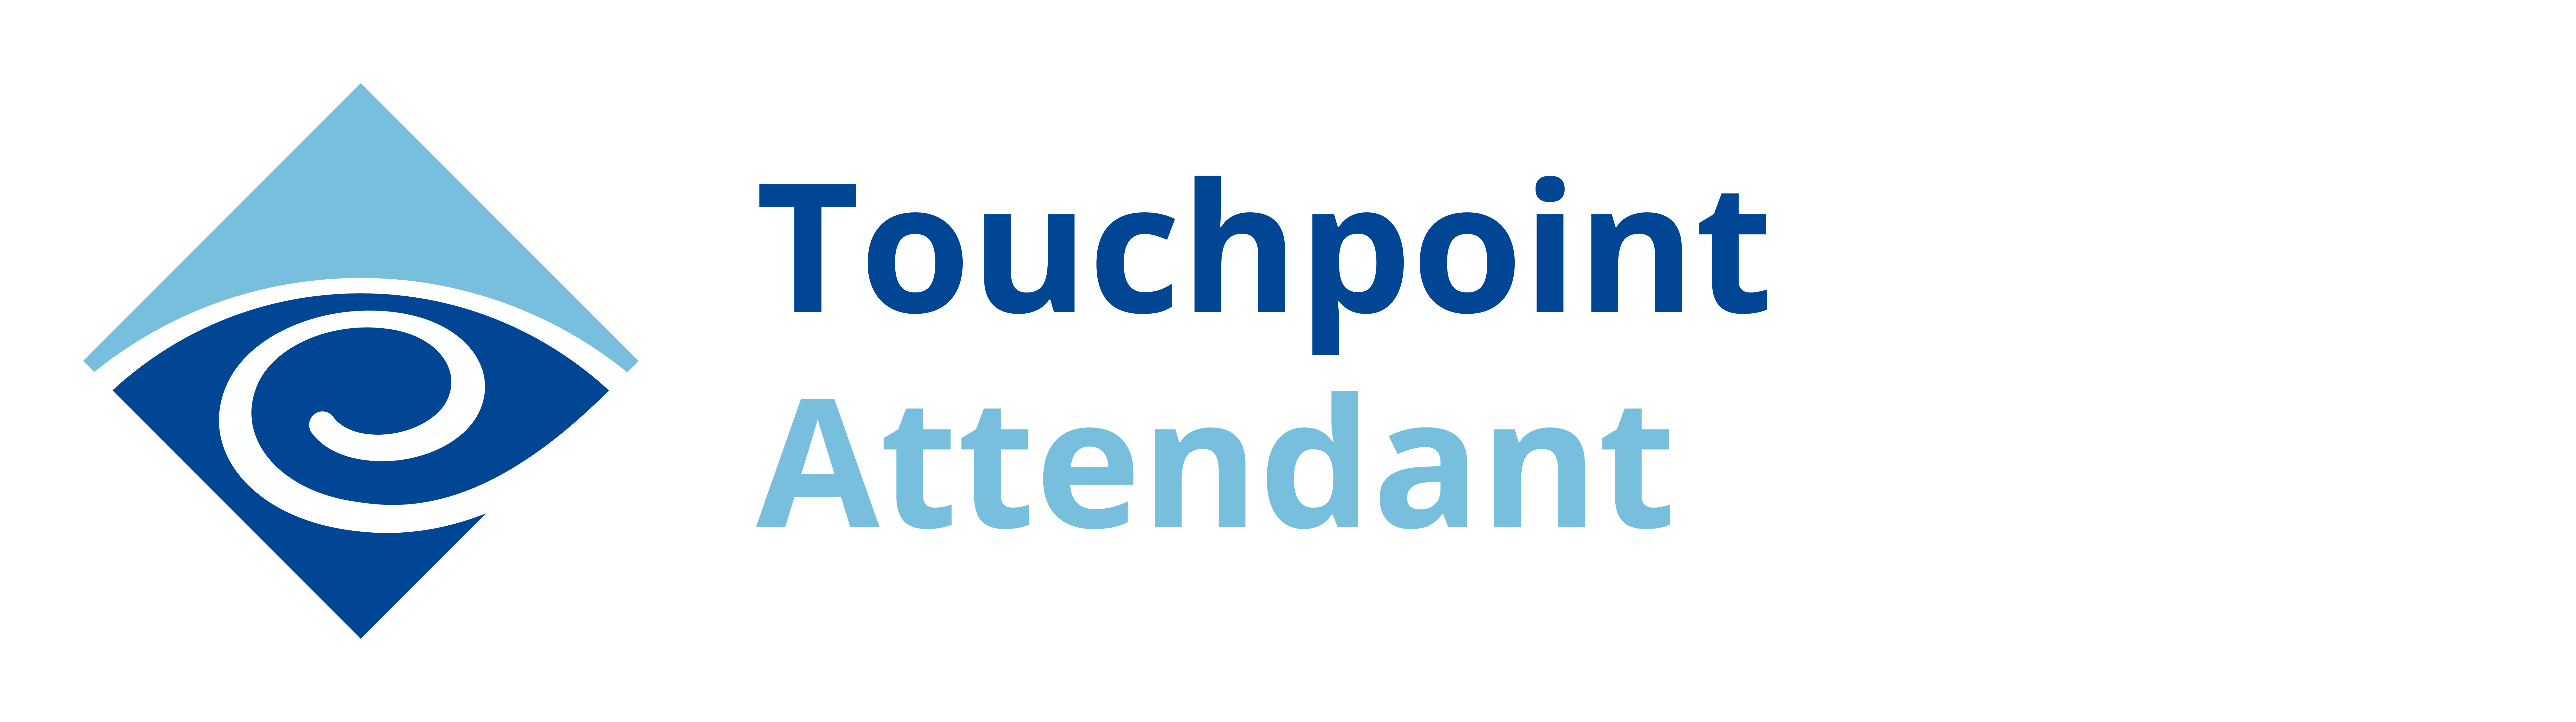 Prodotti Touchpoint Attendant